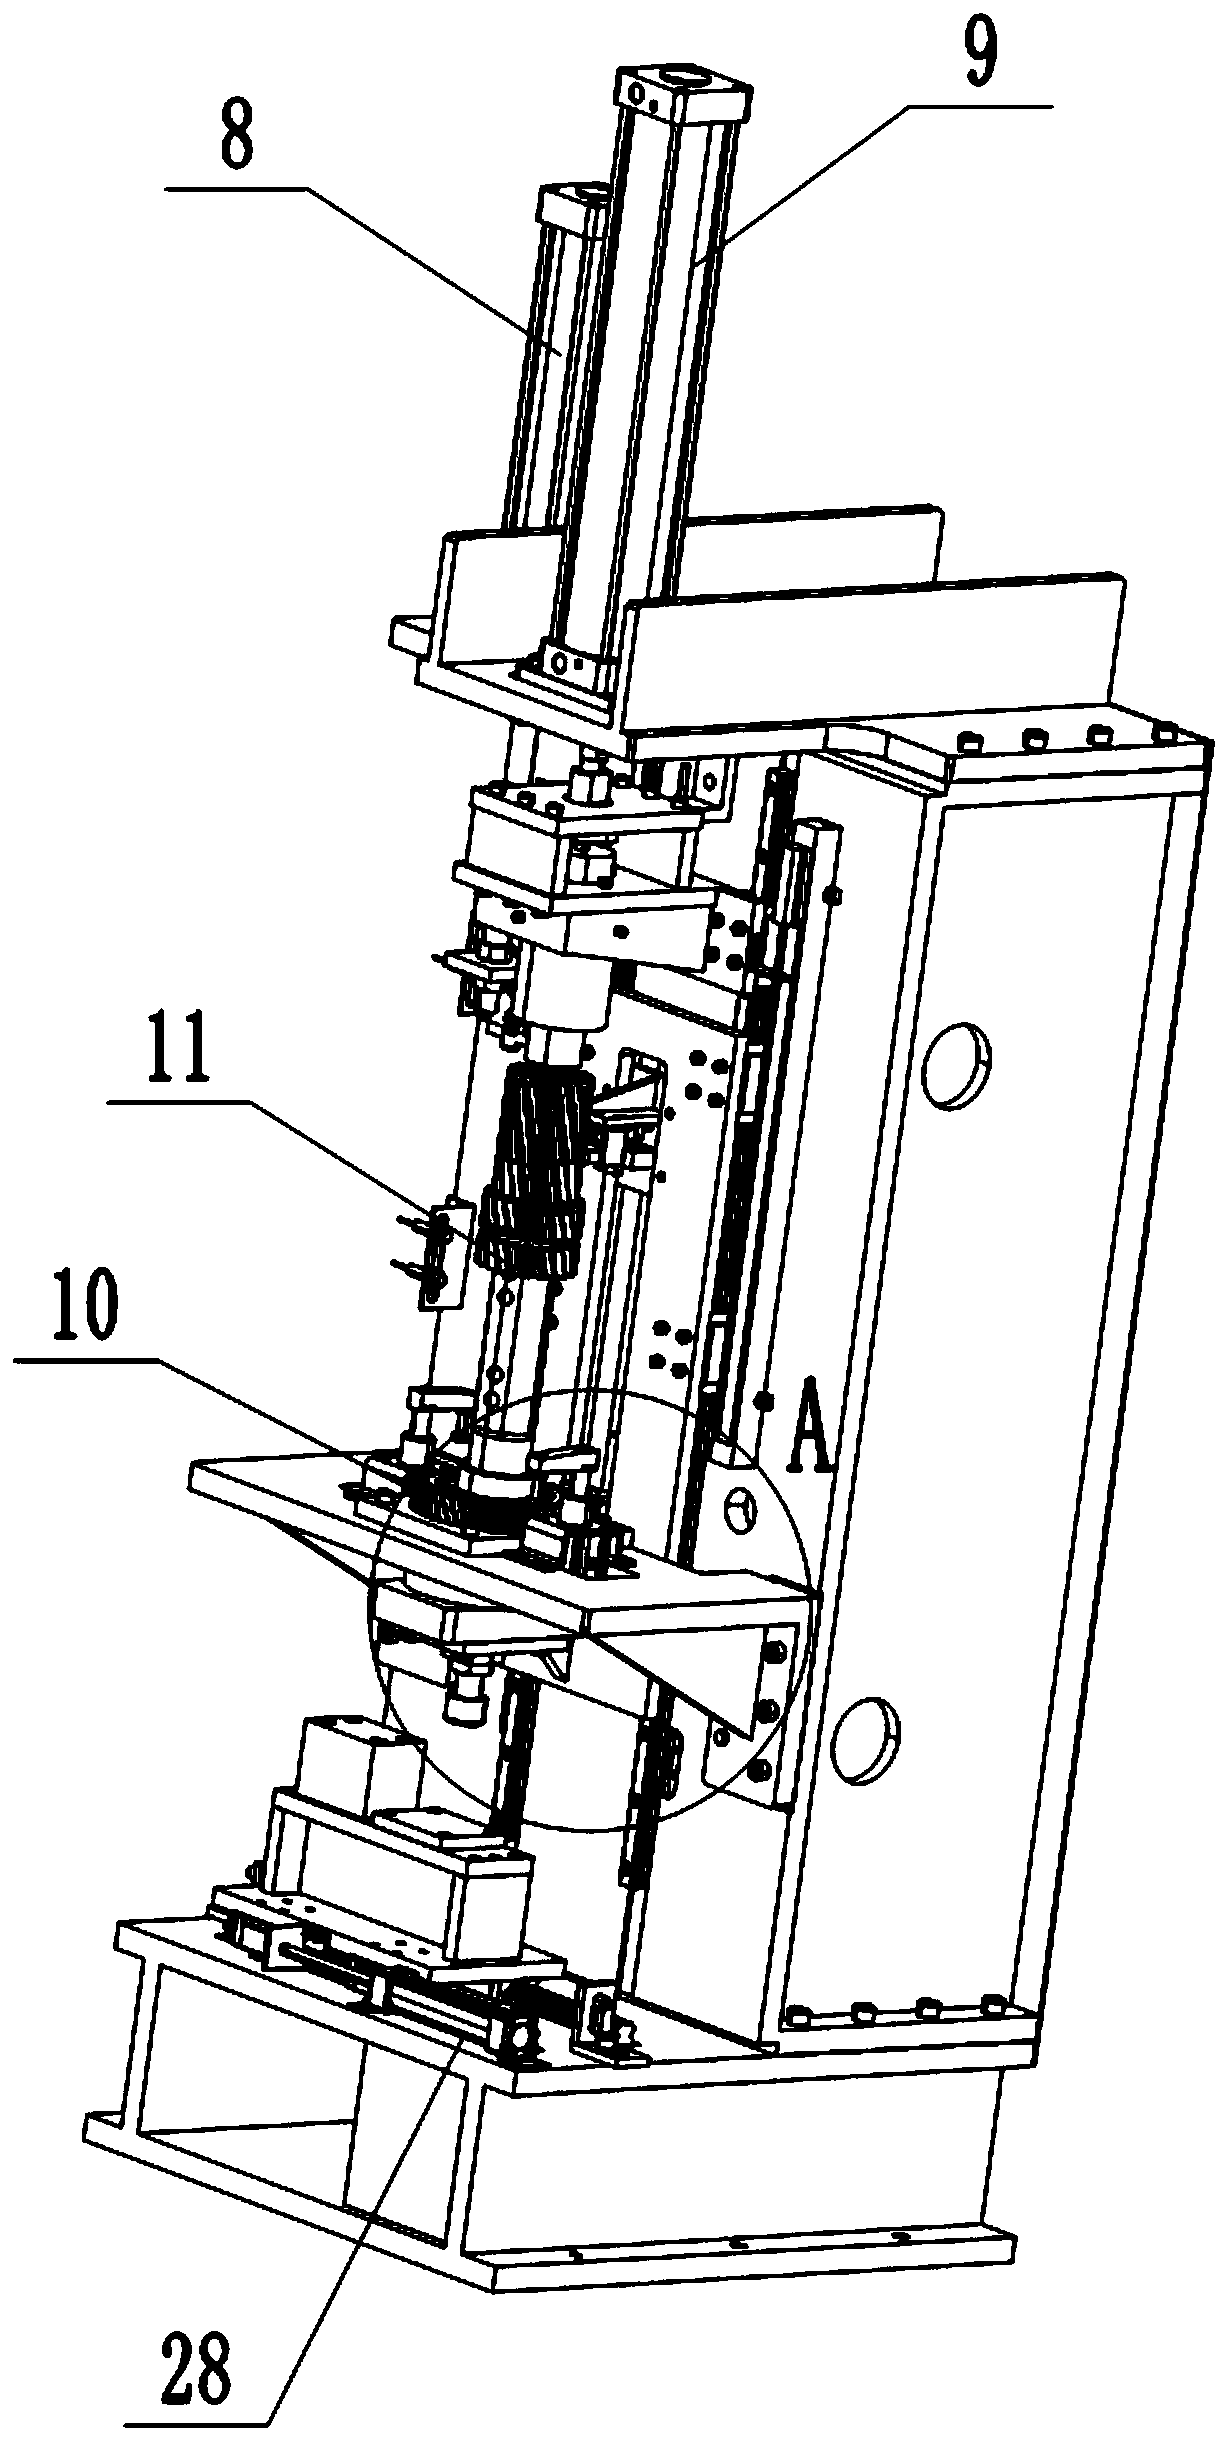 Automatic assembling equipment for gear shaft